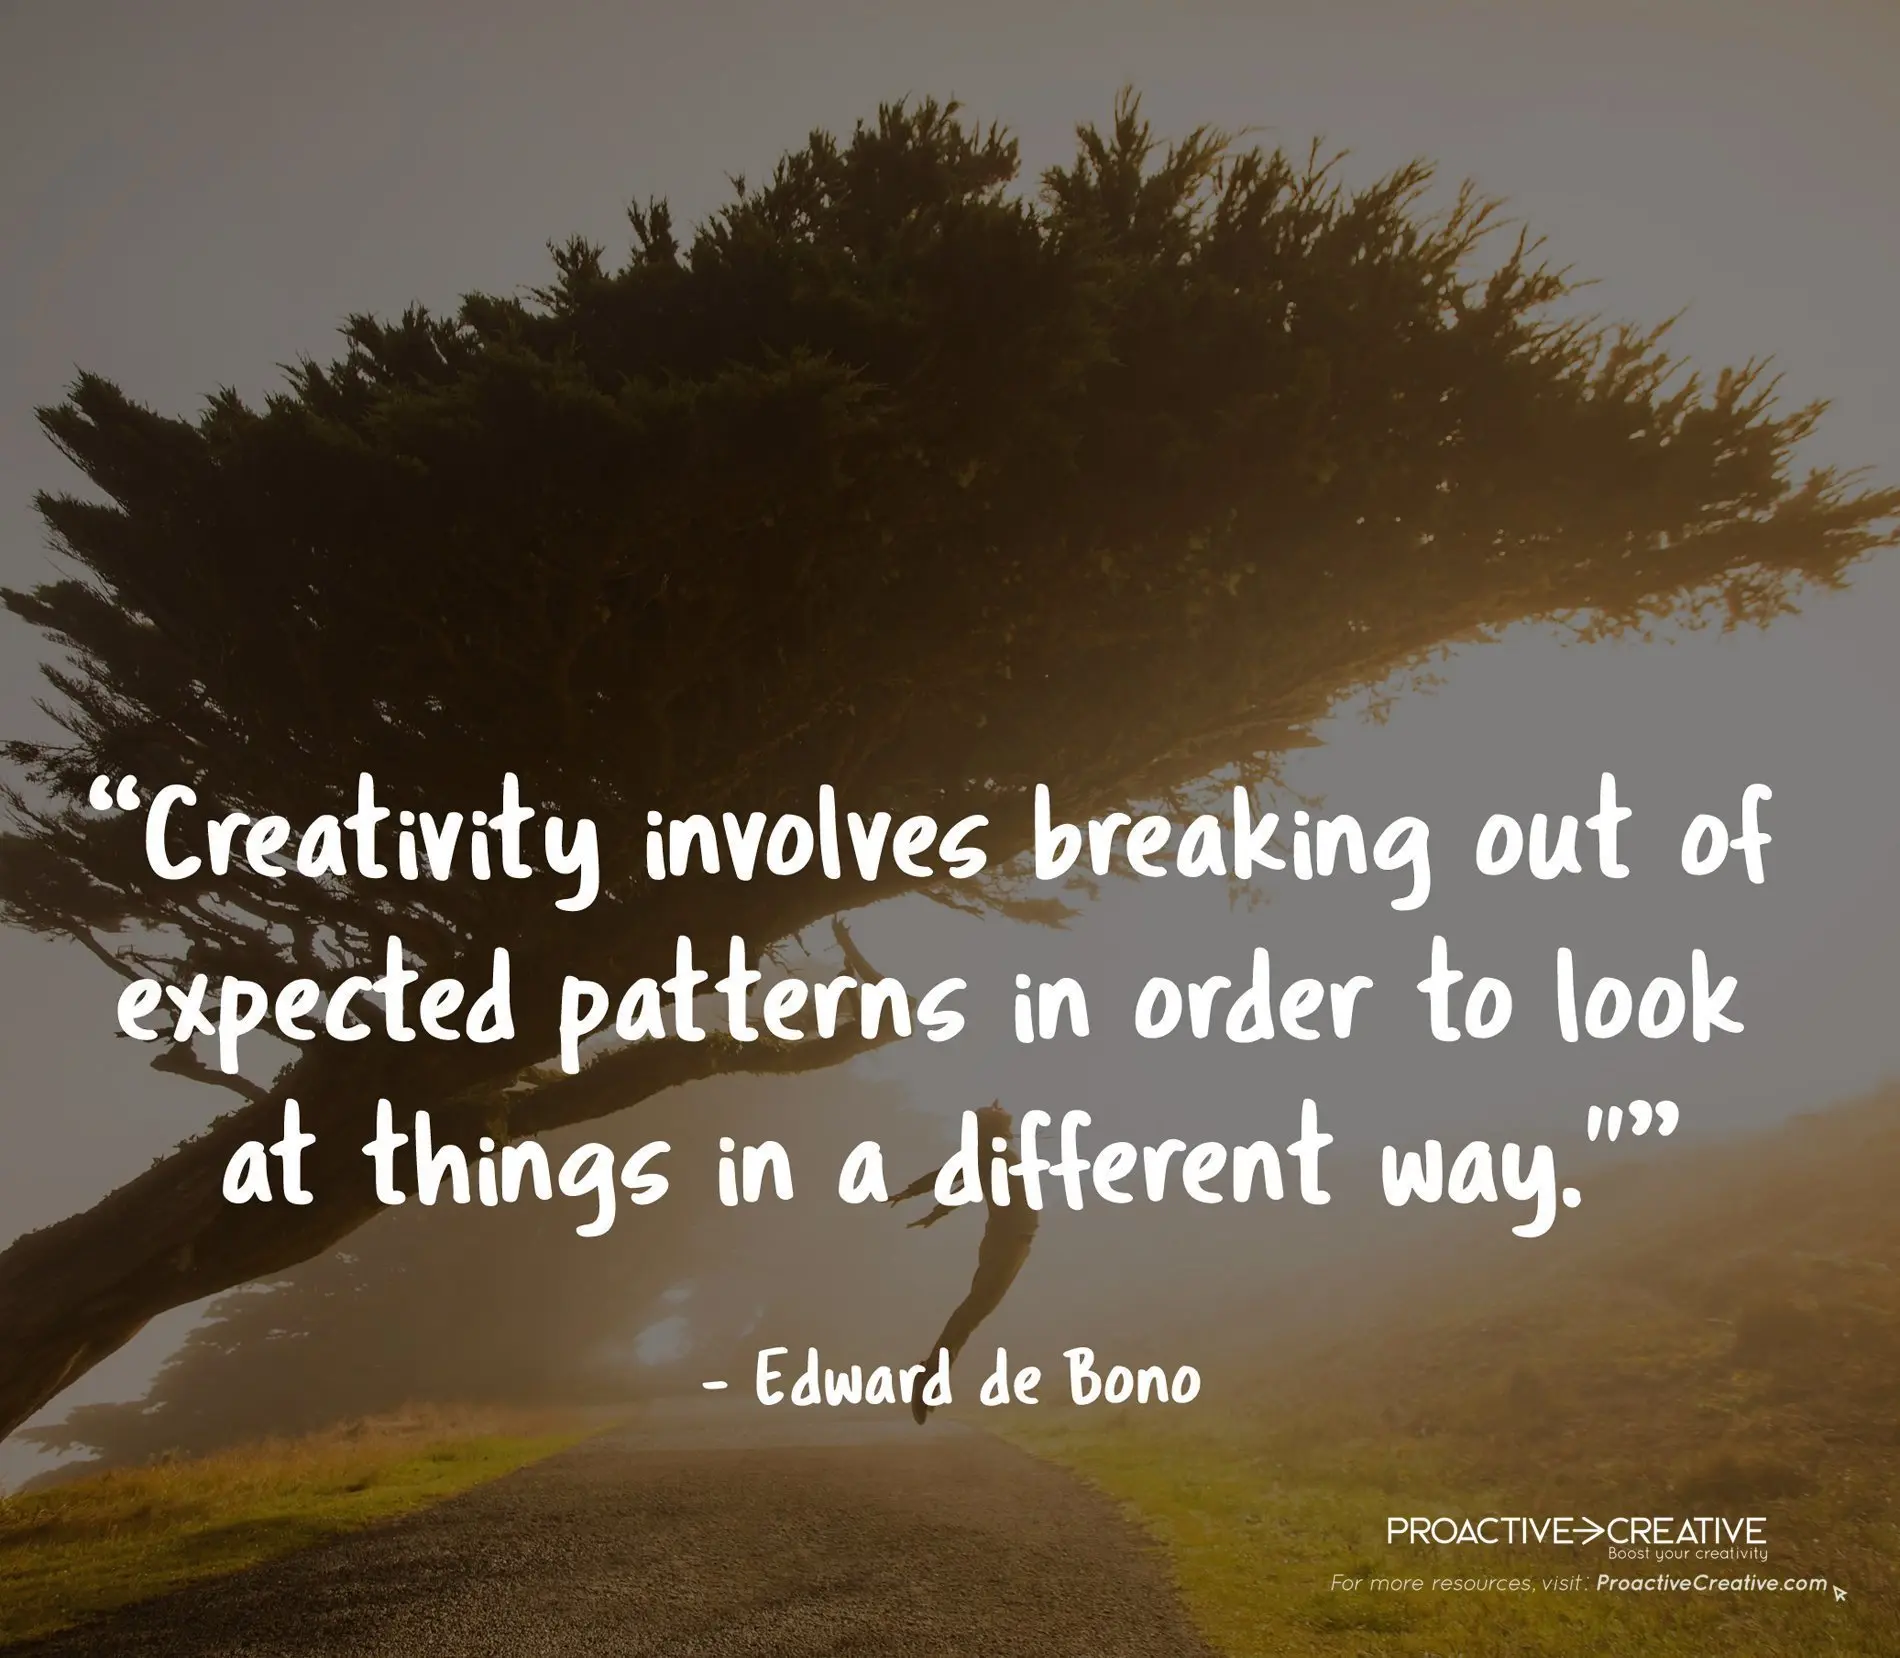 Quotes About Creativity - Edward de Bono